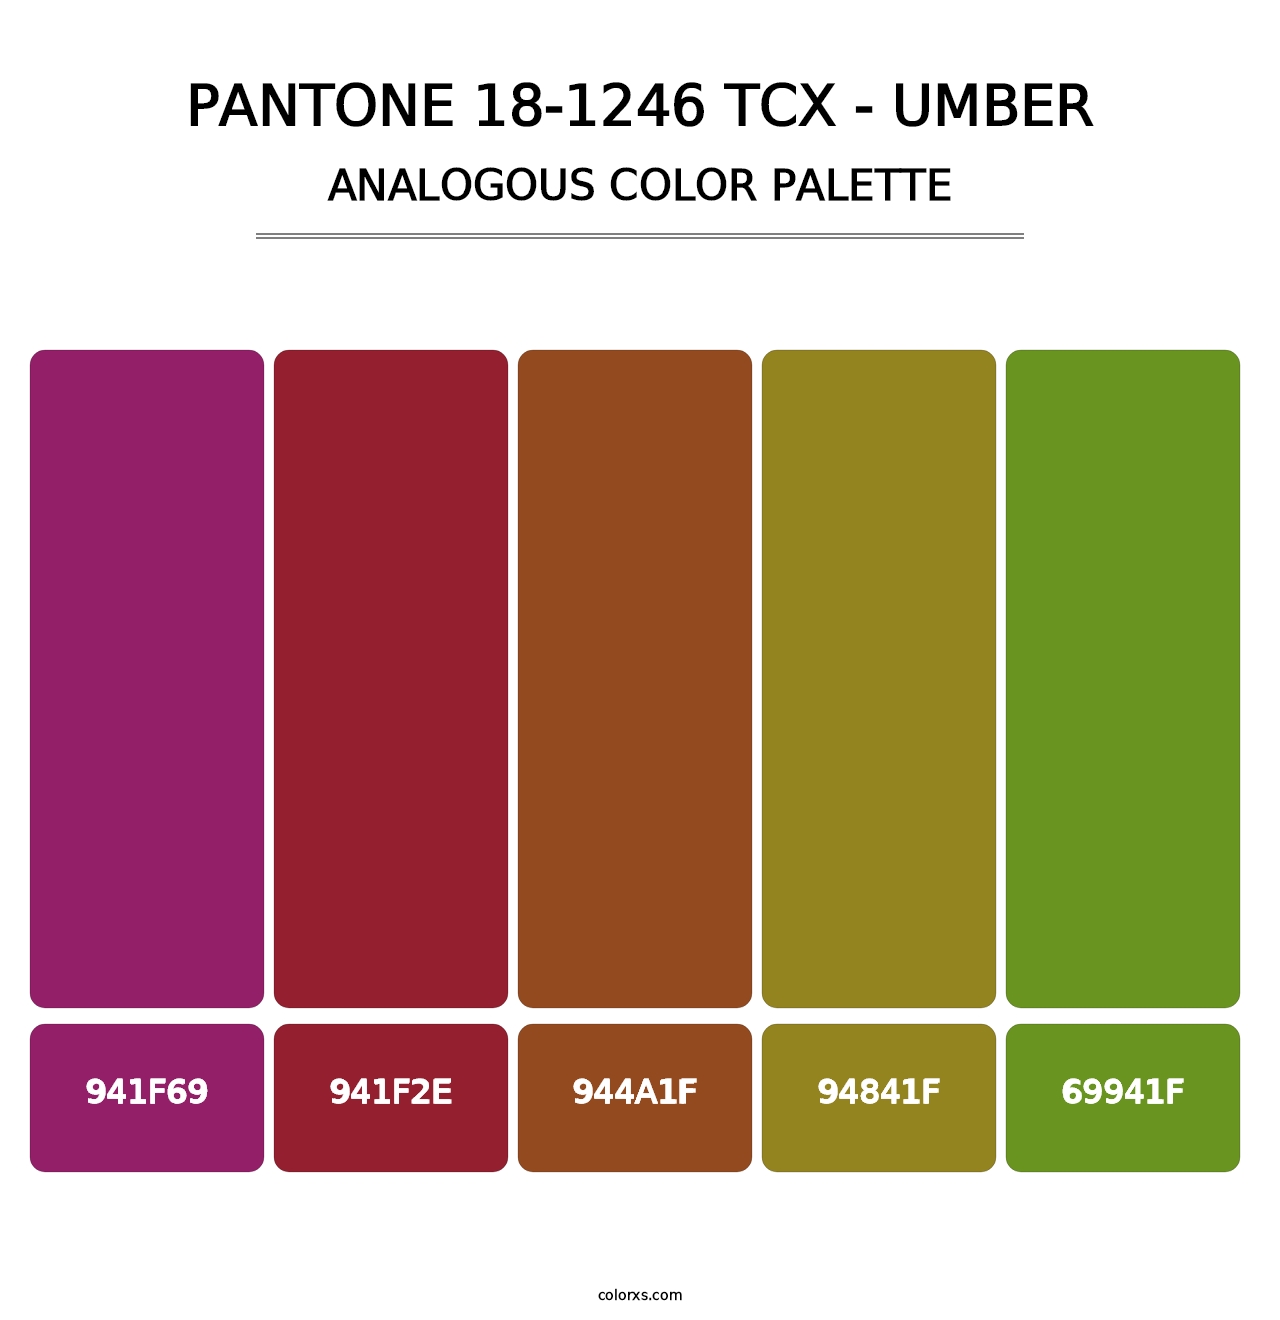 PANTONE 18-1246 TCX - Umber - Analogous Color Palette